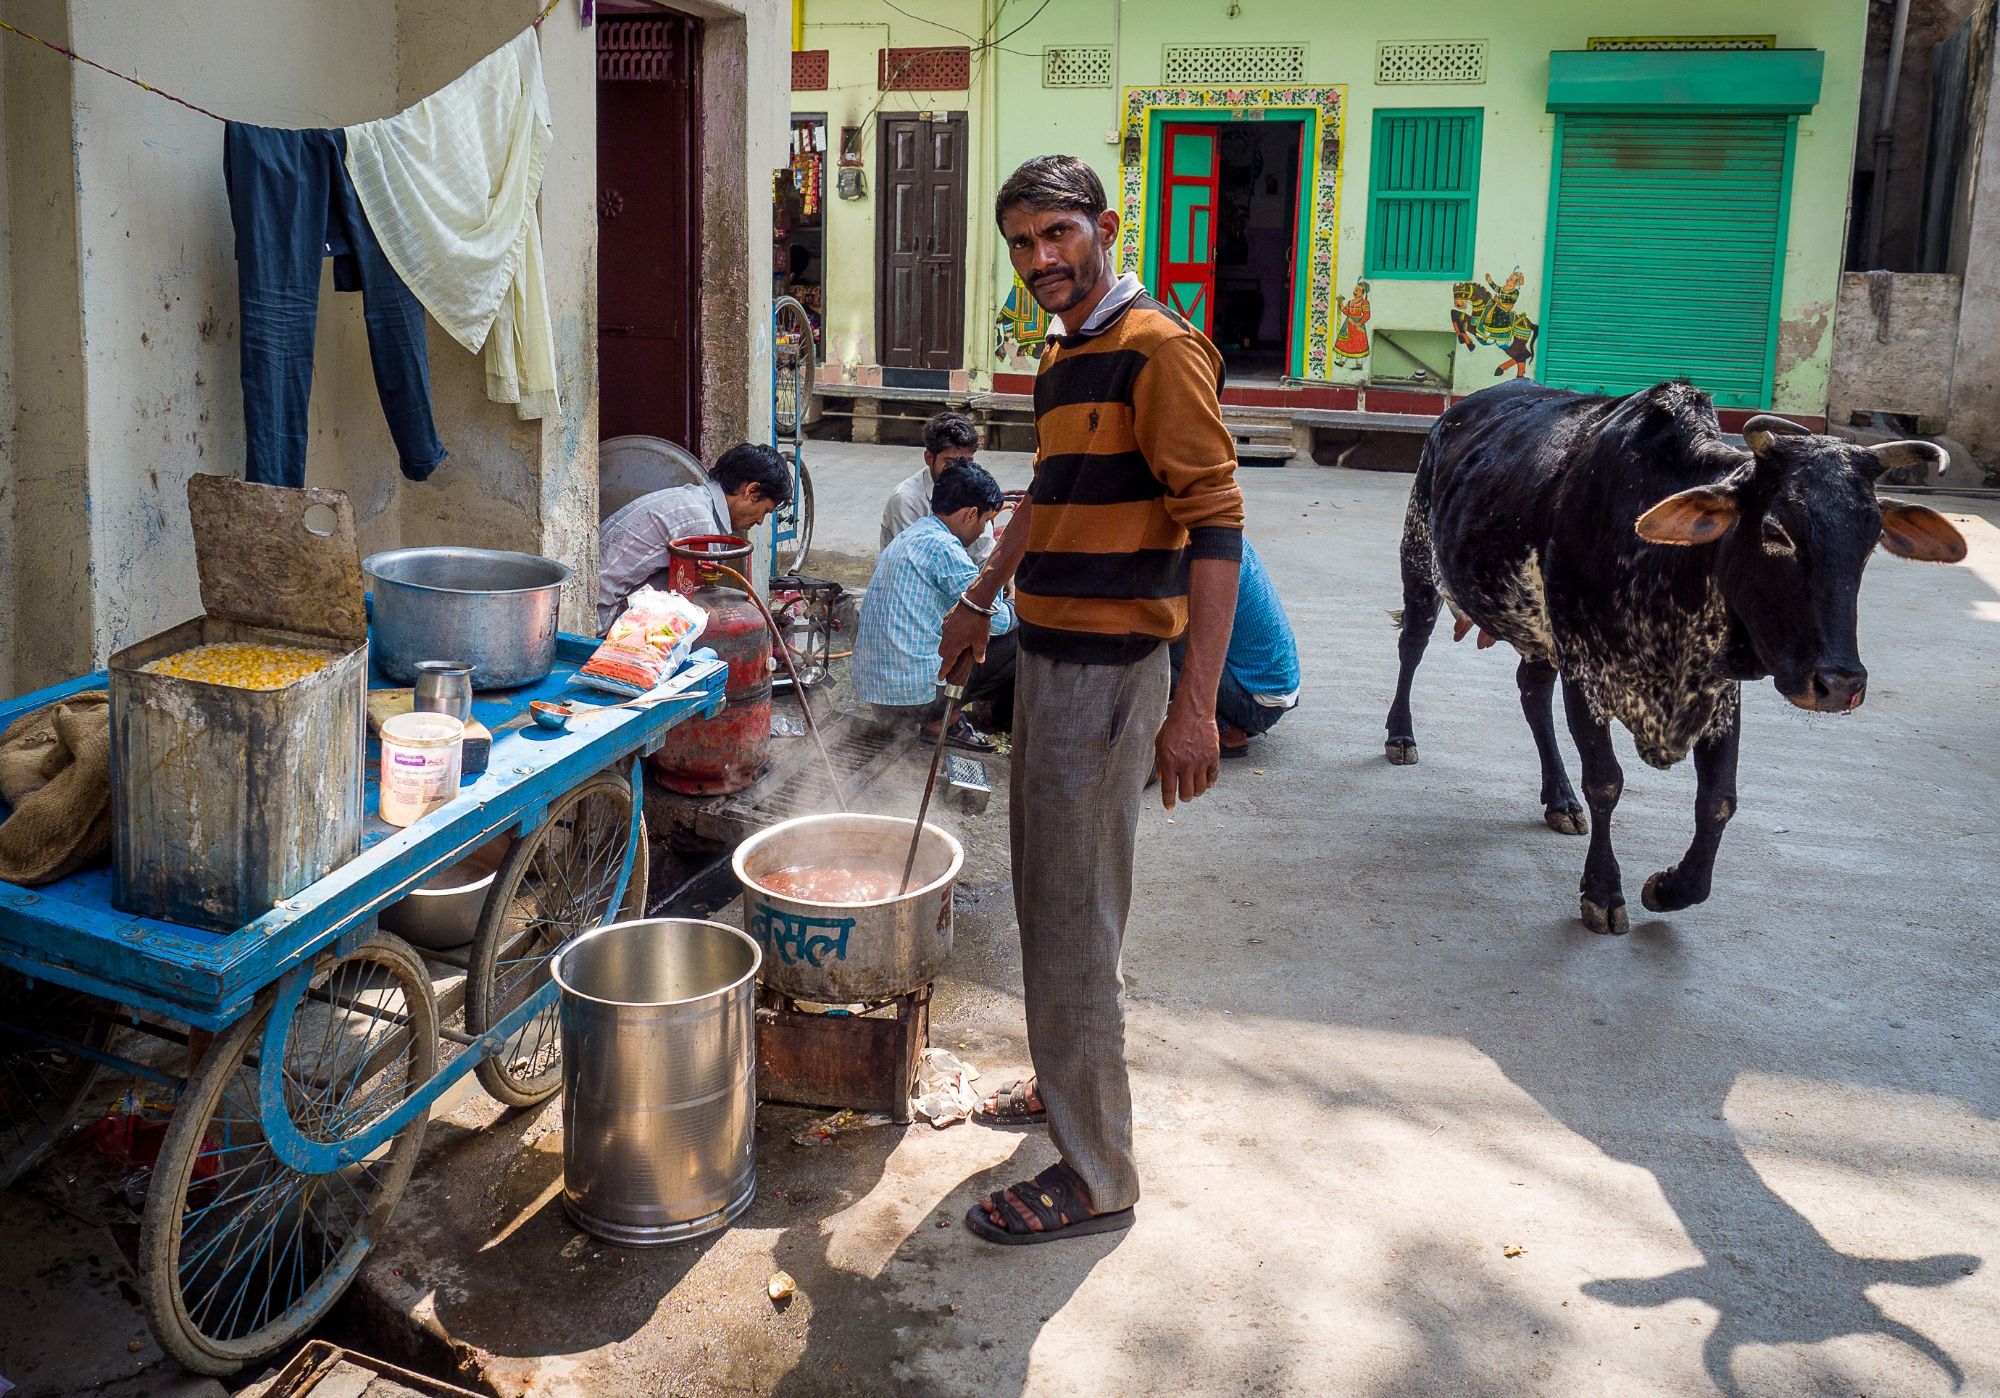 Man making street food in India.